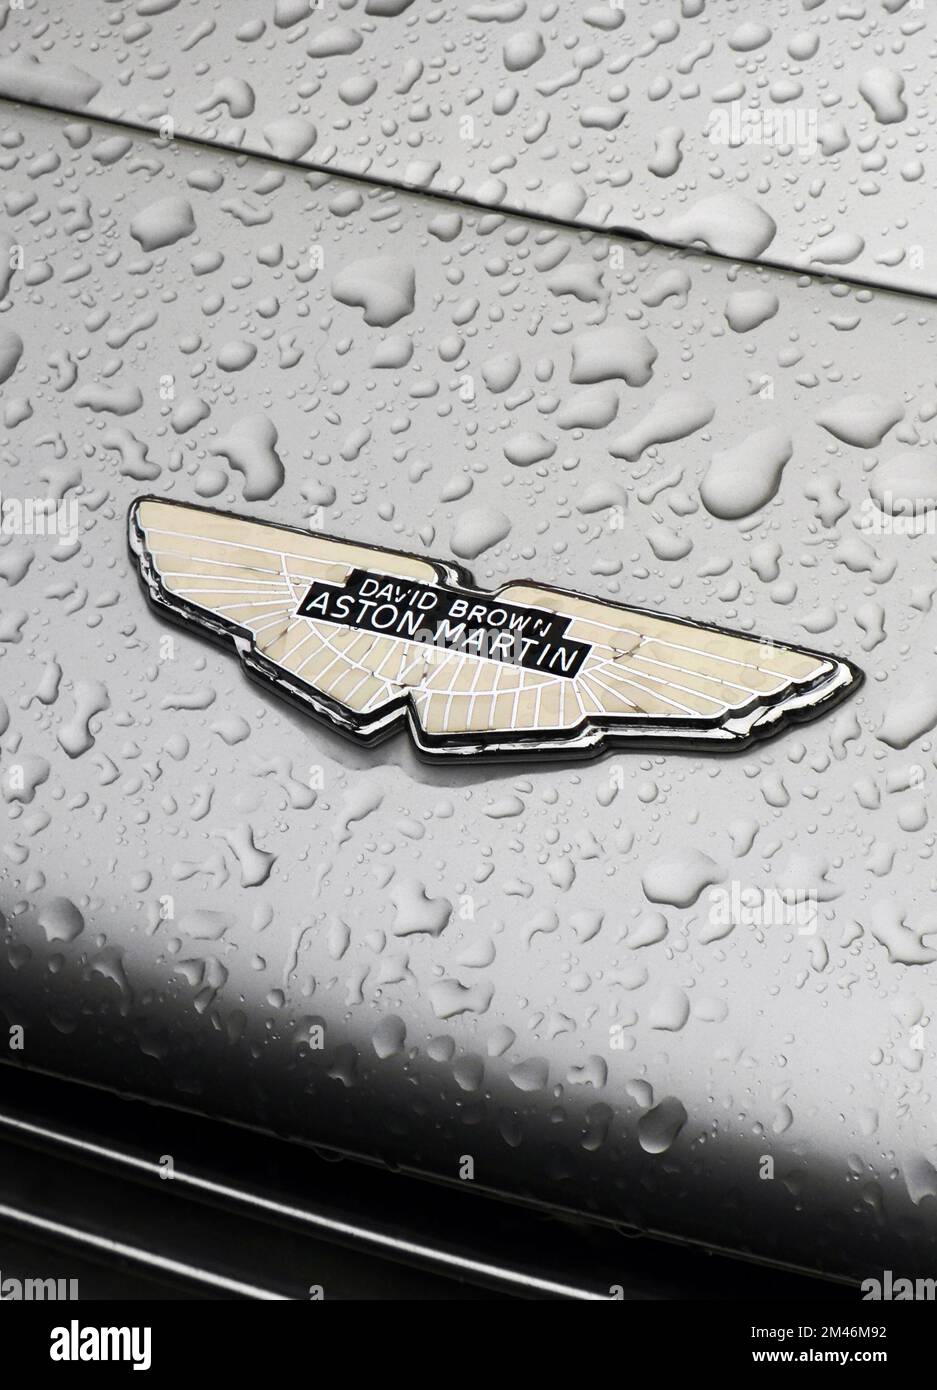 September 18, 2010 - Kyiv, Ukraine: Old Aston Martin supercar emblem. Car in raindrops Stock Photo